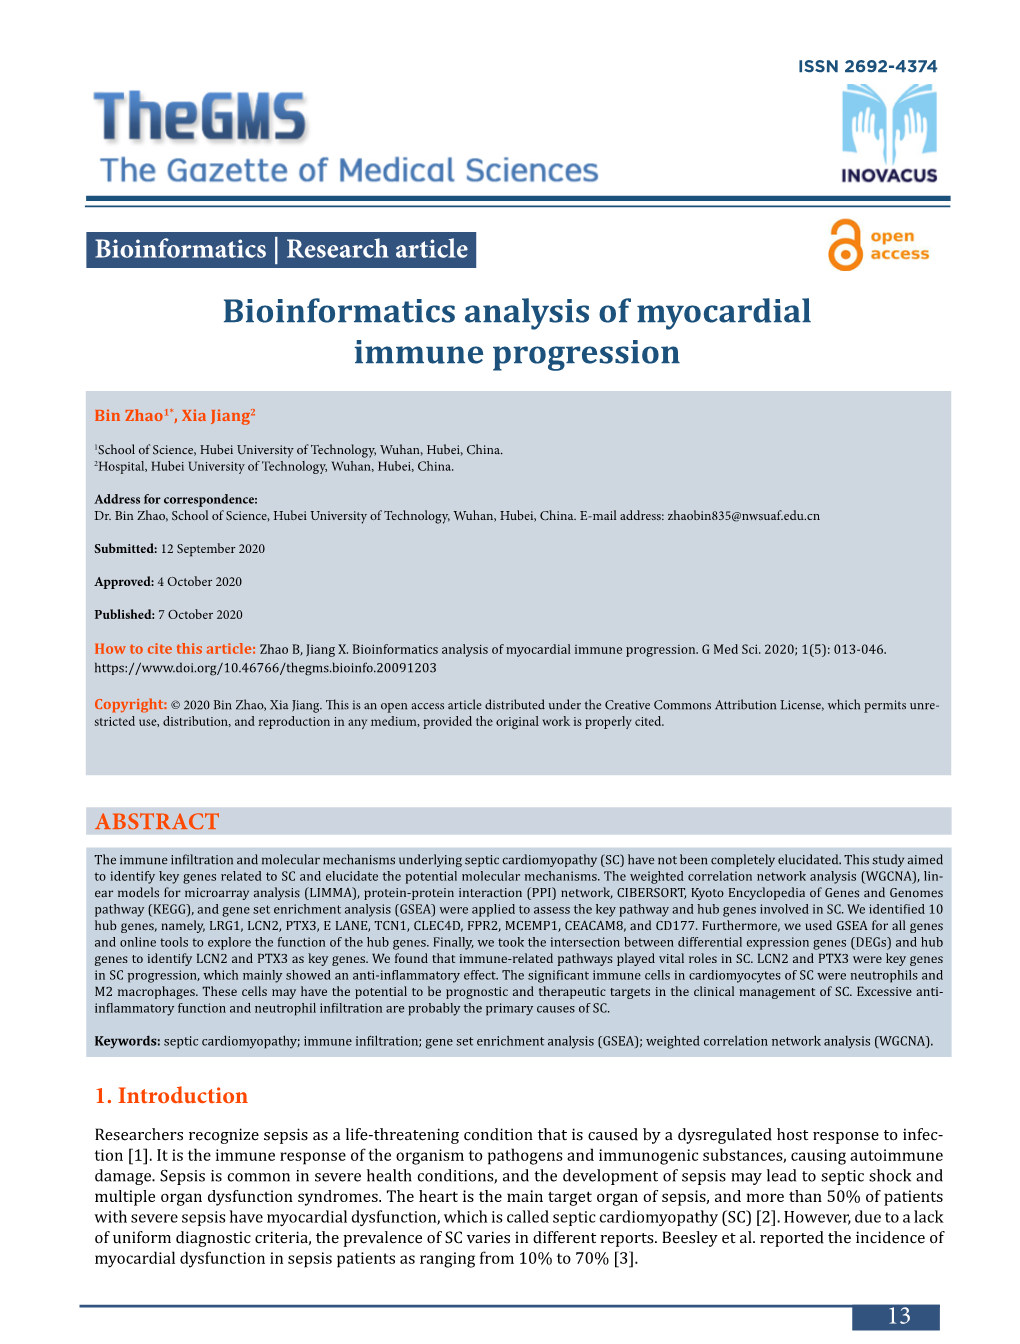 Bioinformatics Analysis of Myocardial Immune Progression